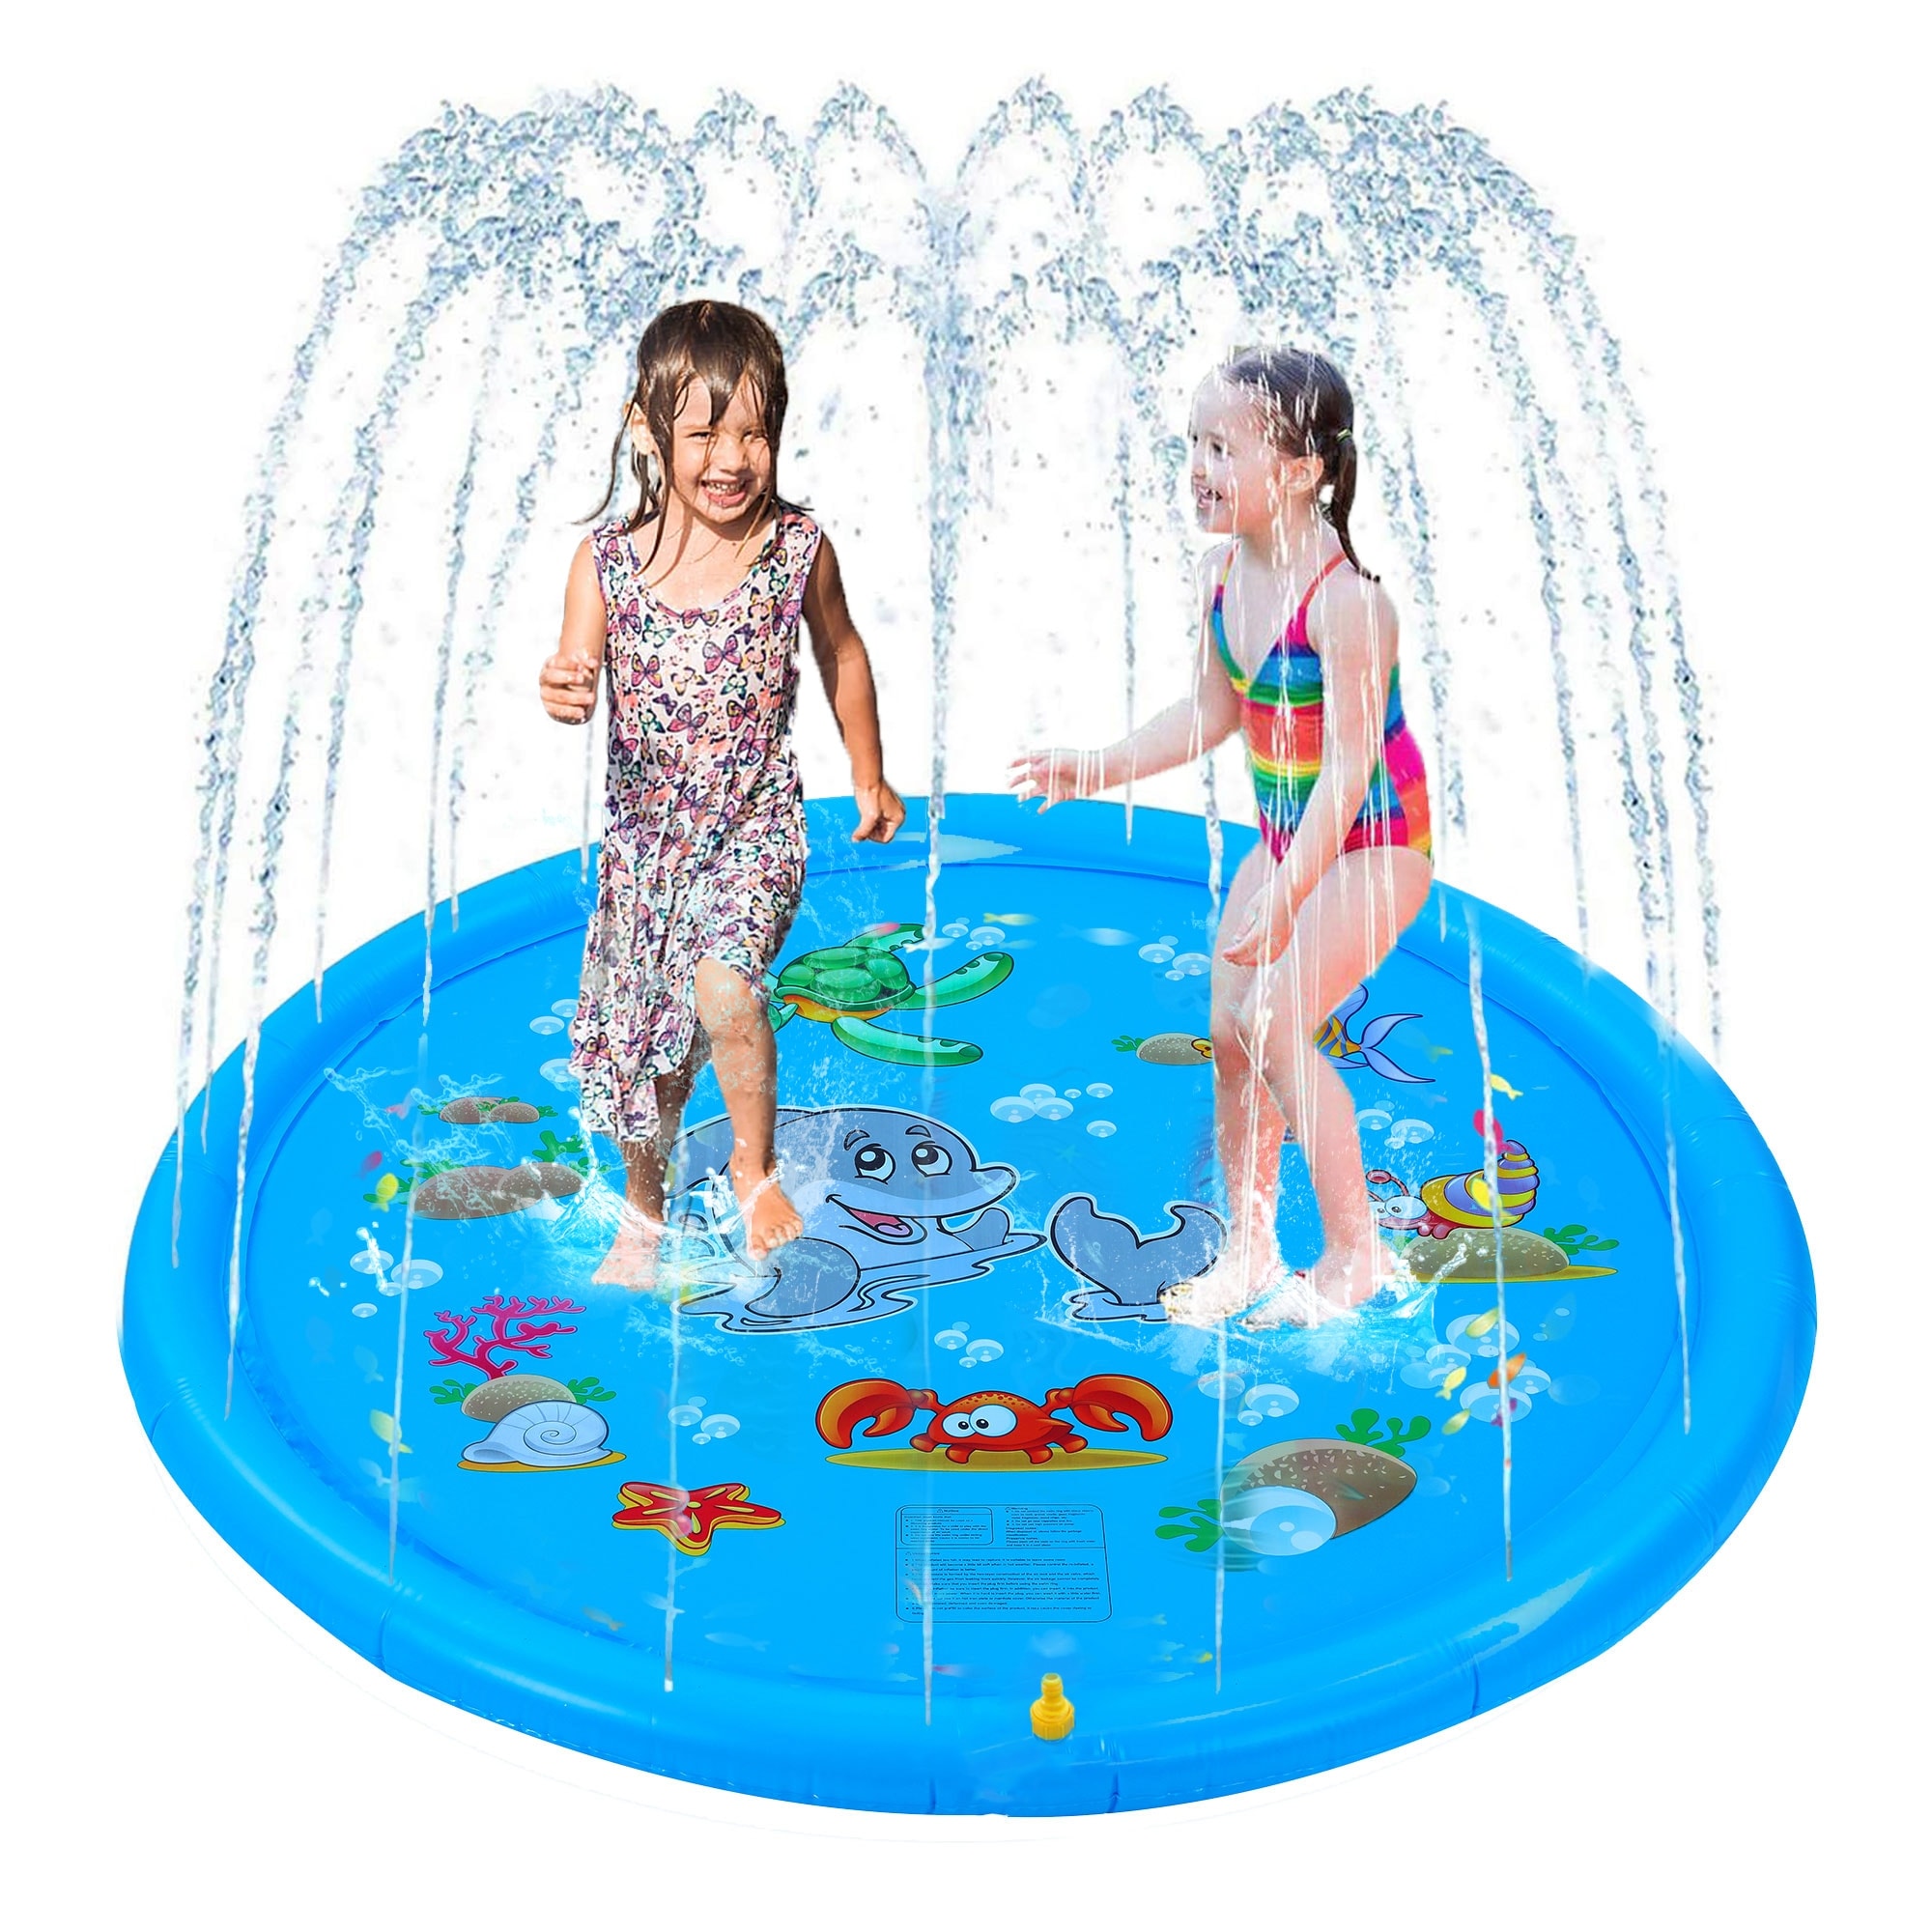 https://ak1.ostkcdn.com/images/products/is/images/direct/d62c5fd00119f2d423cbbed47e7704df21a65d15/Dimple-Splash-Pad---67-inch-Large-Kids-Sprinkler-Play-Mat-for-Toddlers%2C-Big-Kids---Outdoor-Backyard-Kid-Toddler-Sprinkler-Pool.jpg